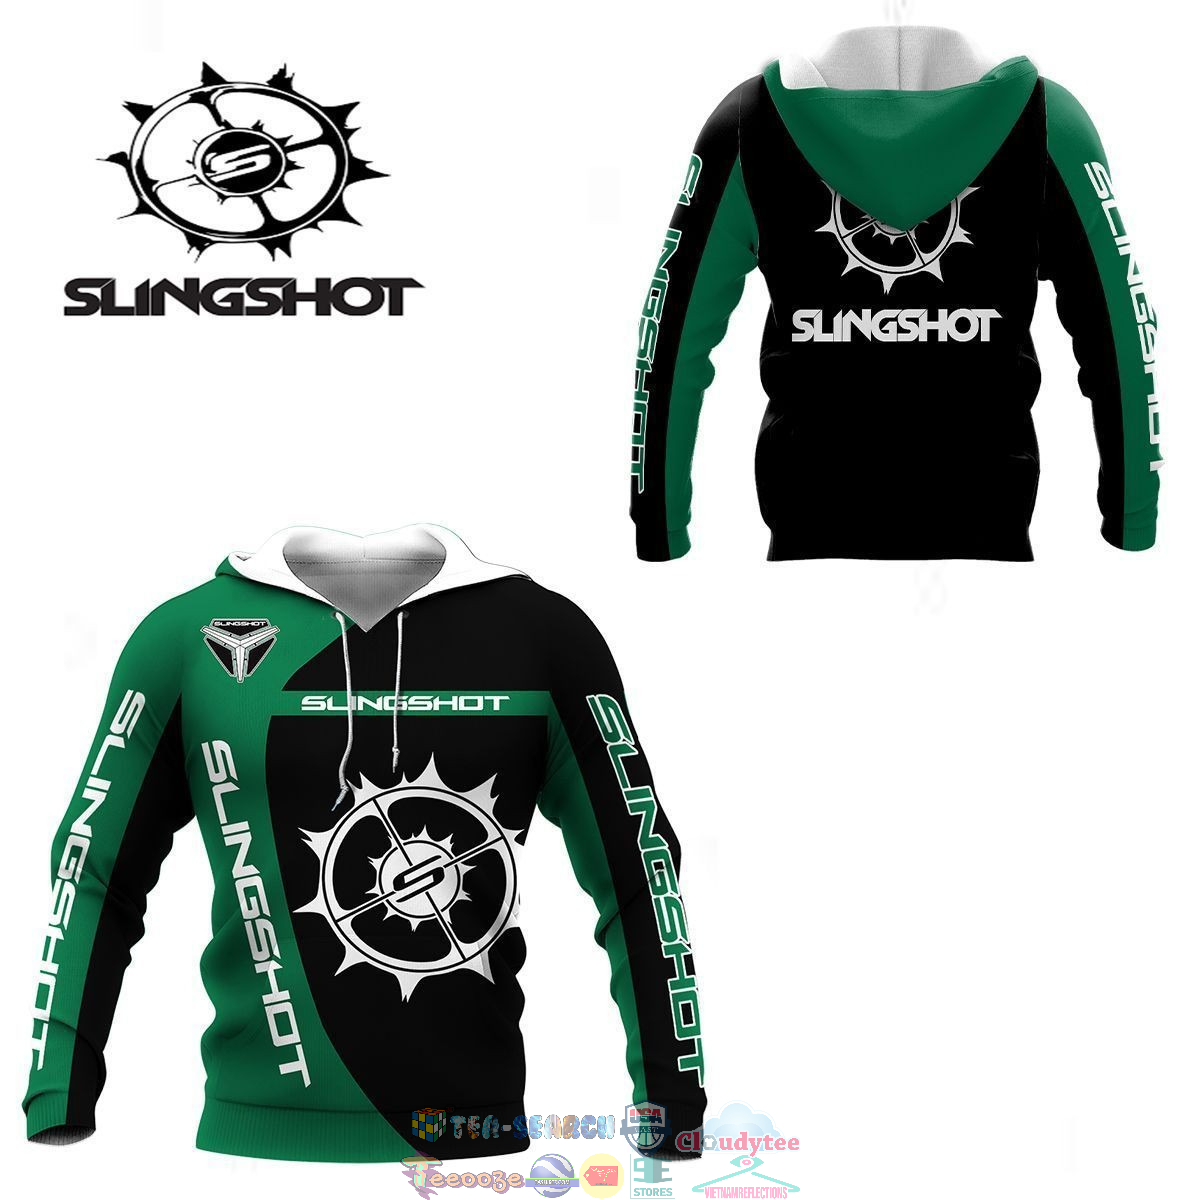 Slingshot ver 7 3D hoodie and t-shirt – Saleoff